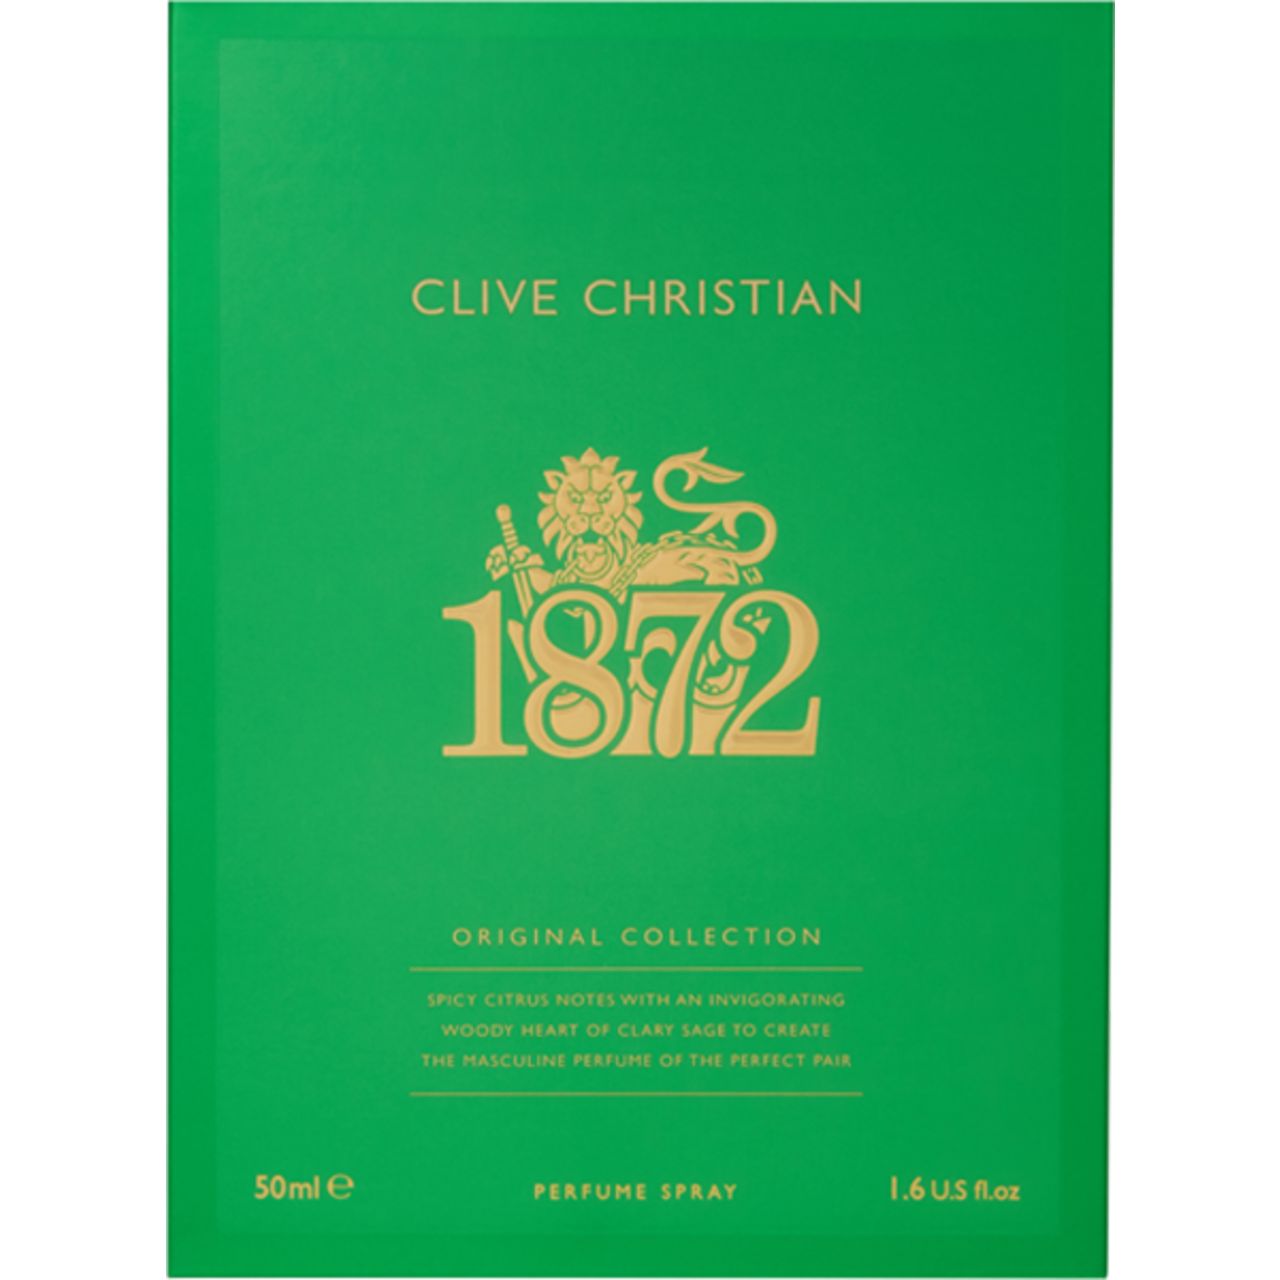 Clive Christian, 1872 Masculine Perfume Spray